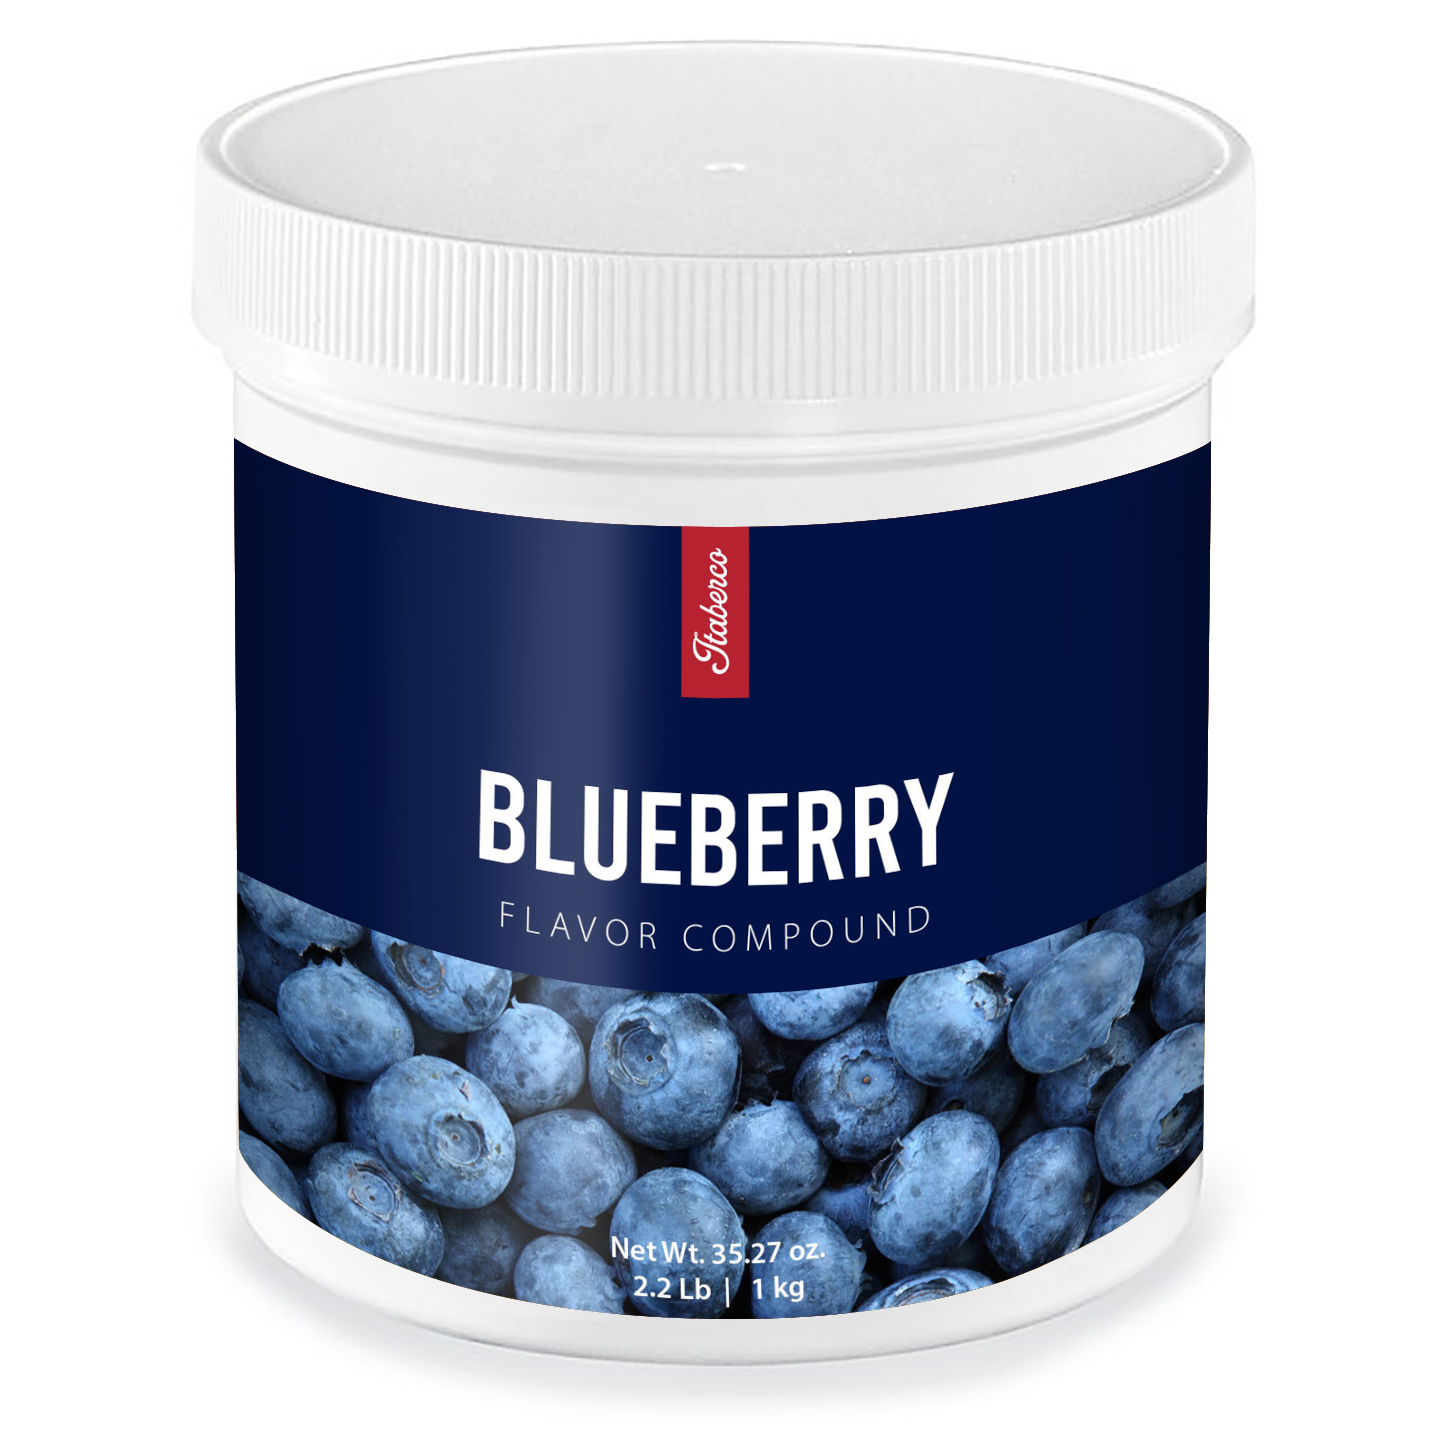 Blueberry Flavor Compound